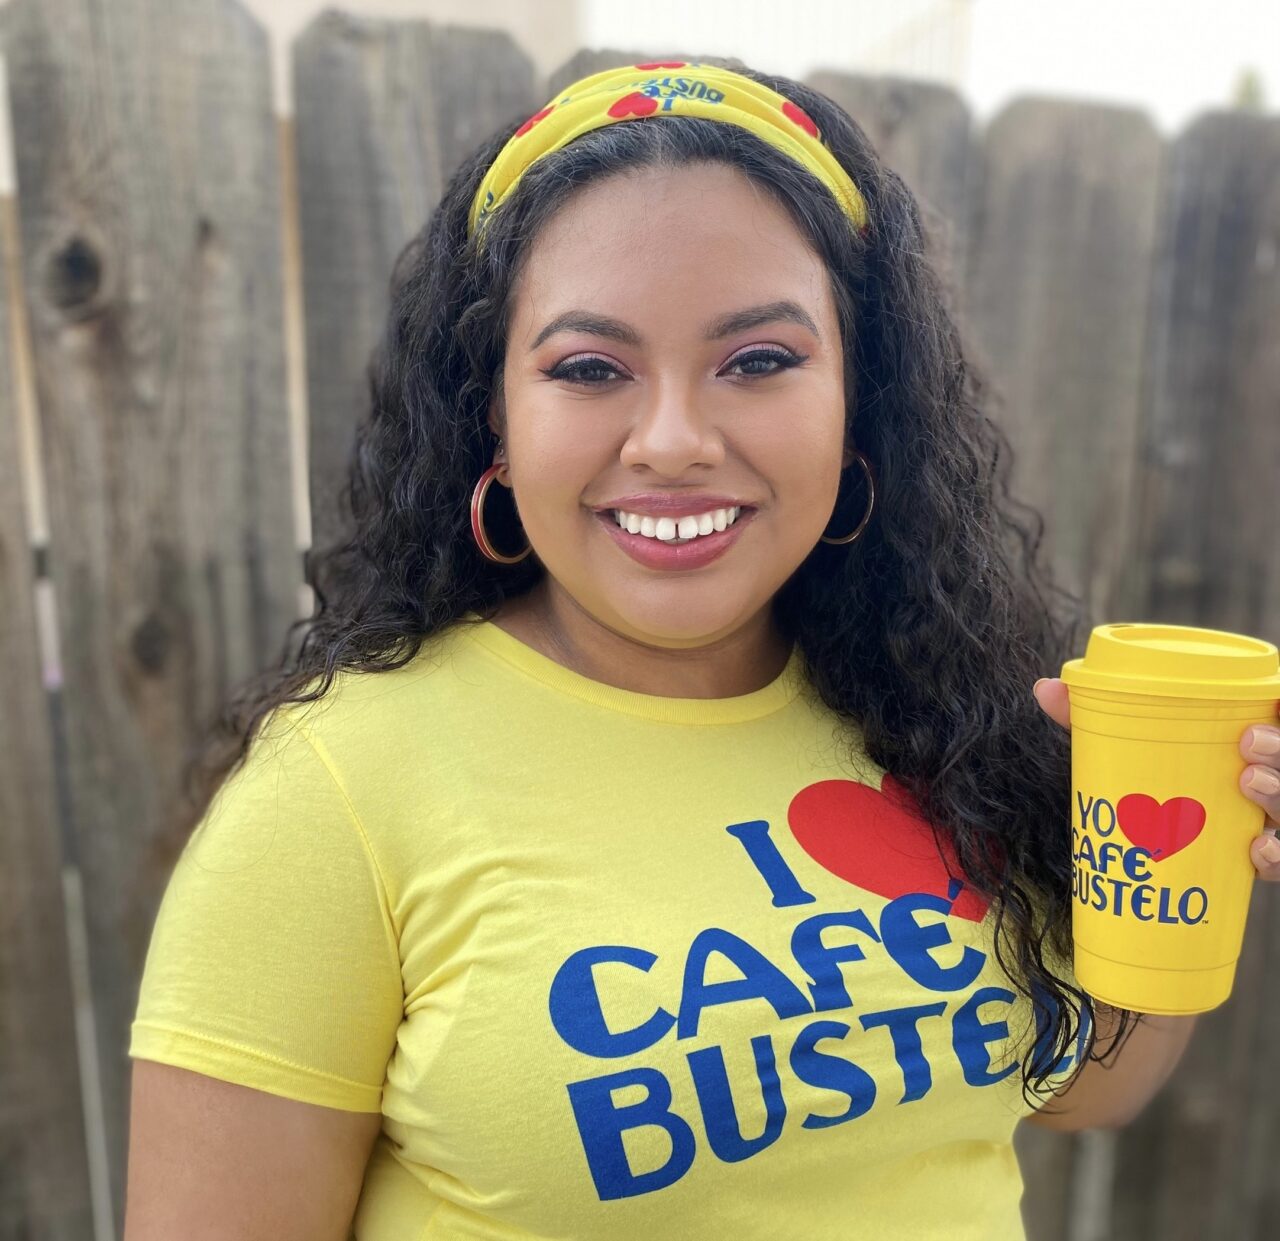 Cafe Bustelo's "El Cafe del Futuro" Scholarship Opportunity for Latino